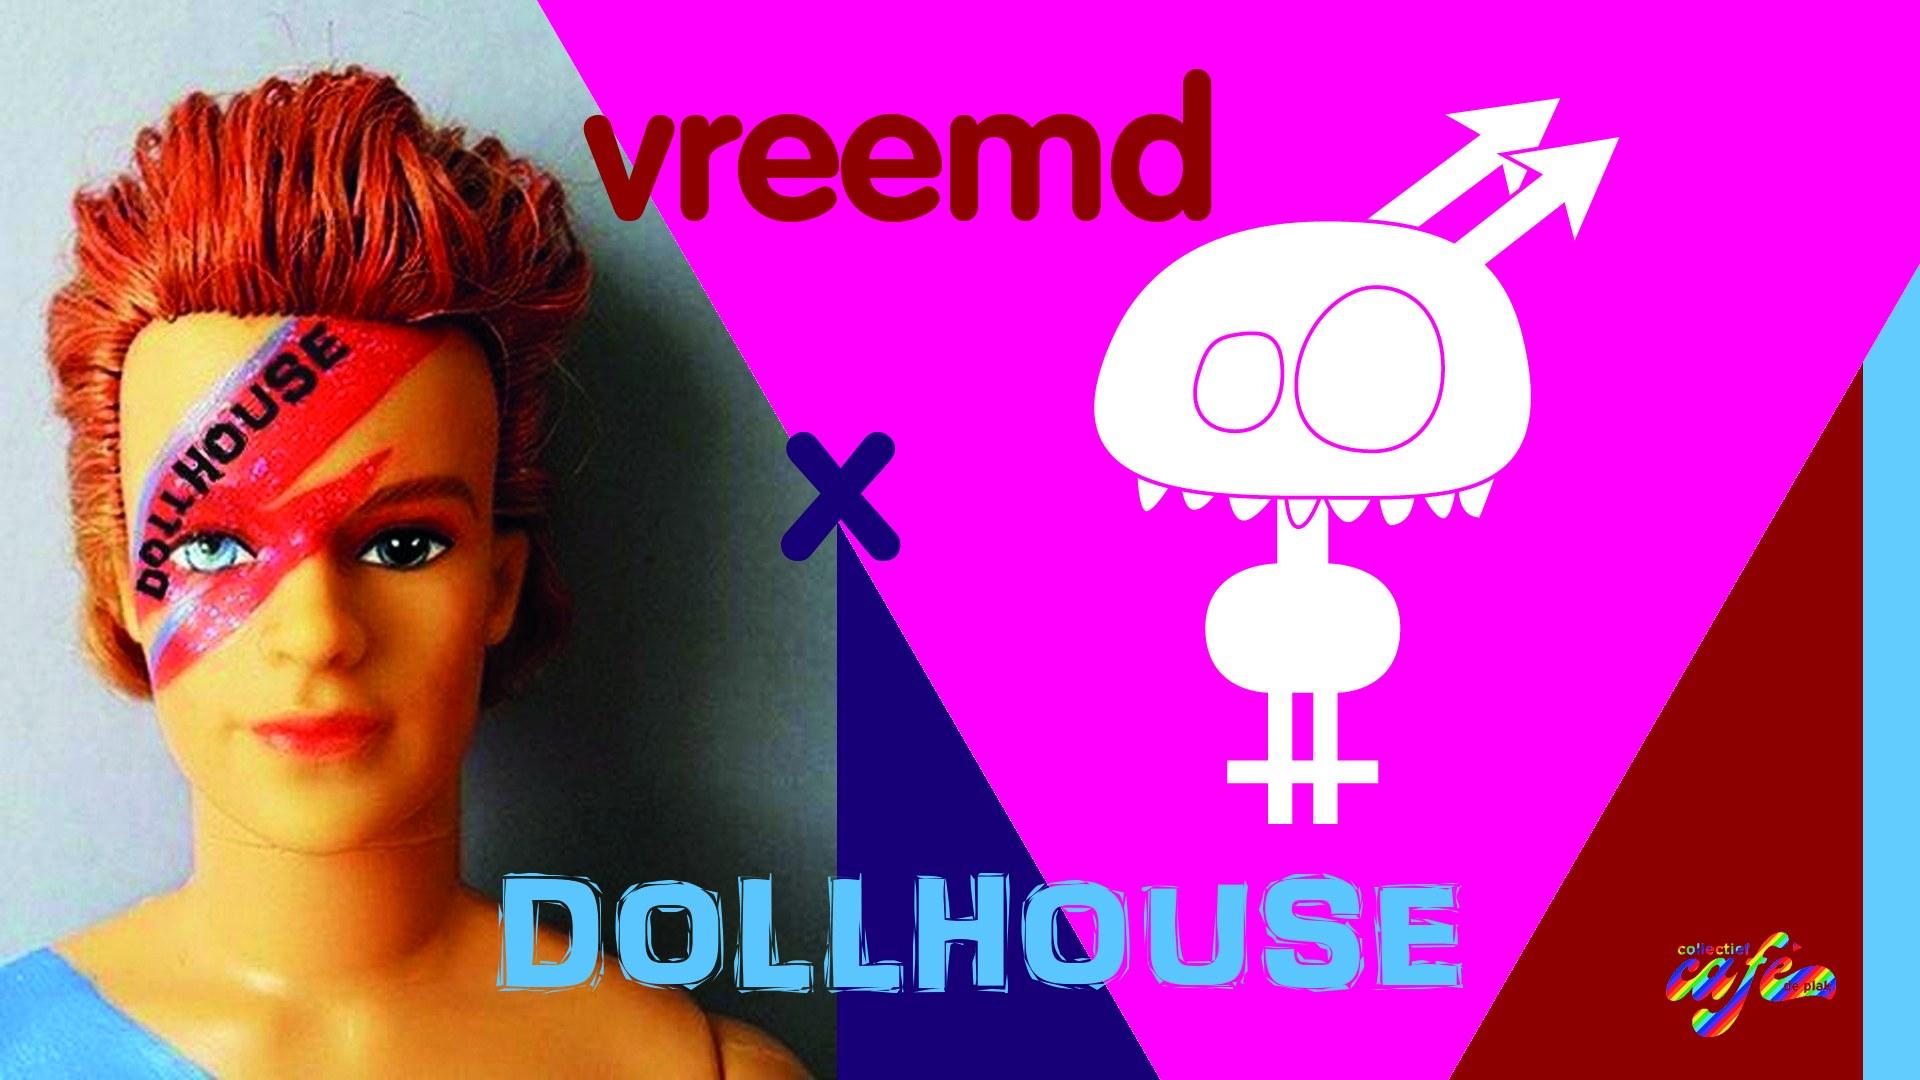 Vreemd Dollhouse